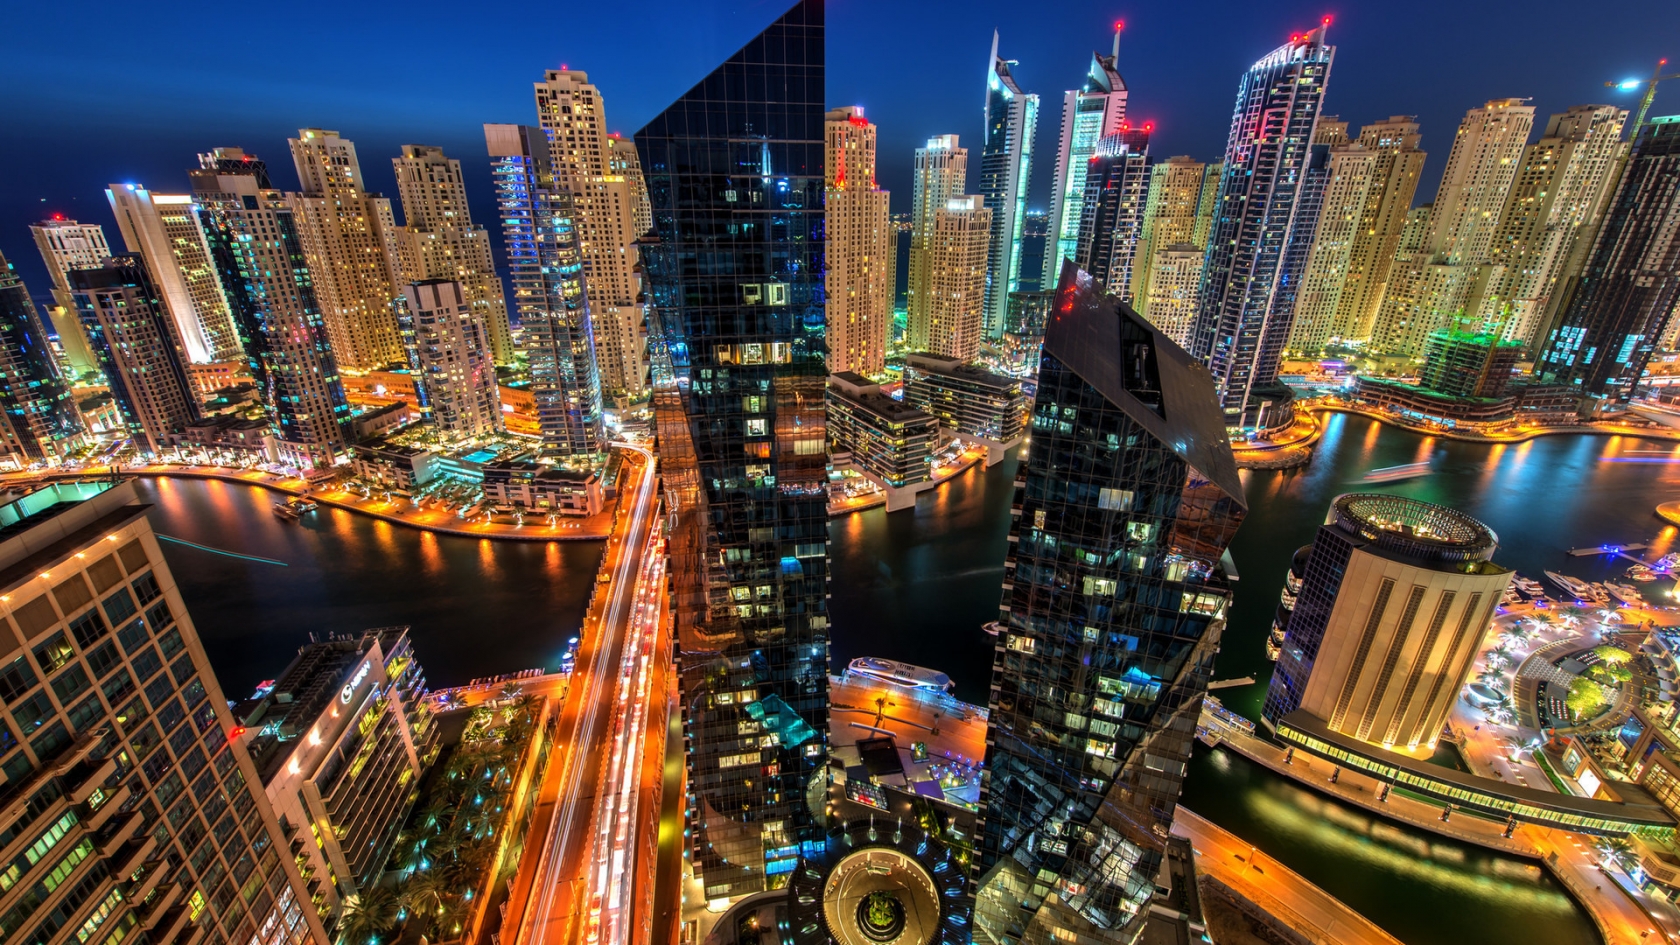 Night in Dubai for 1680 x 945 HDTV resolution